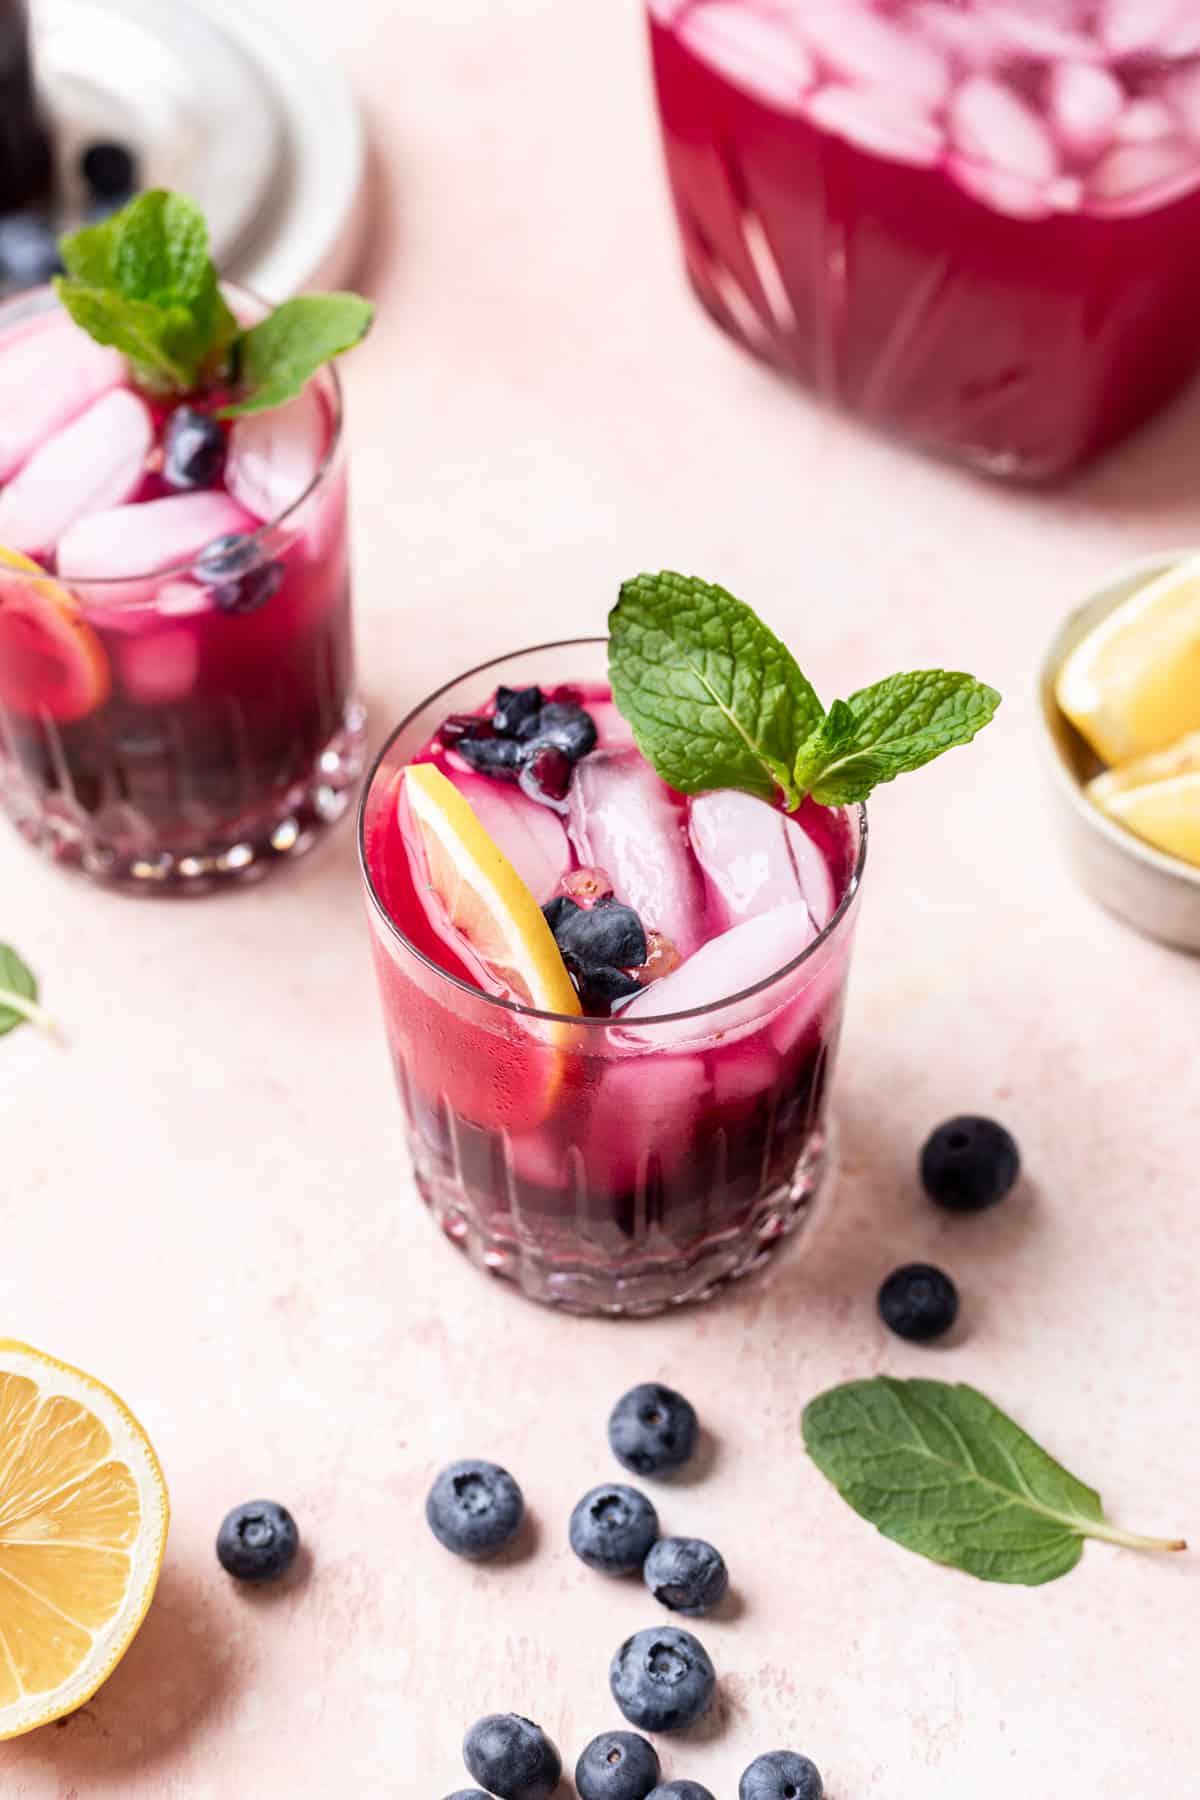 Blueberry vodka lemonade with ice, blueberries, and lemon slices.